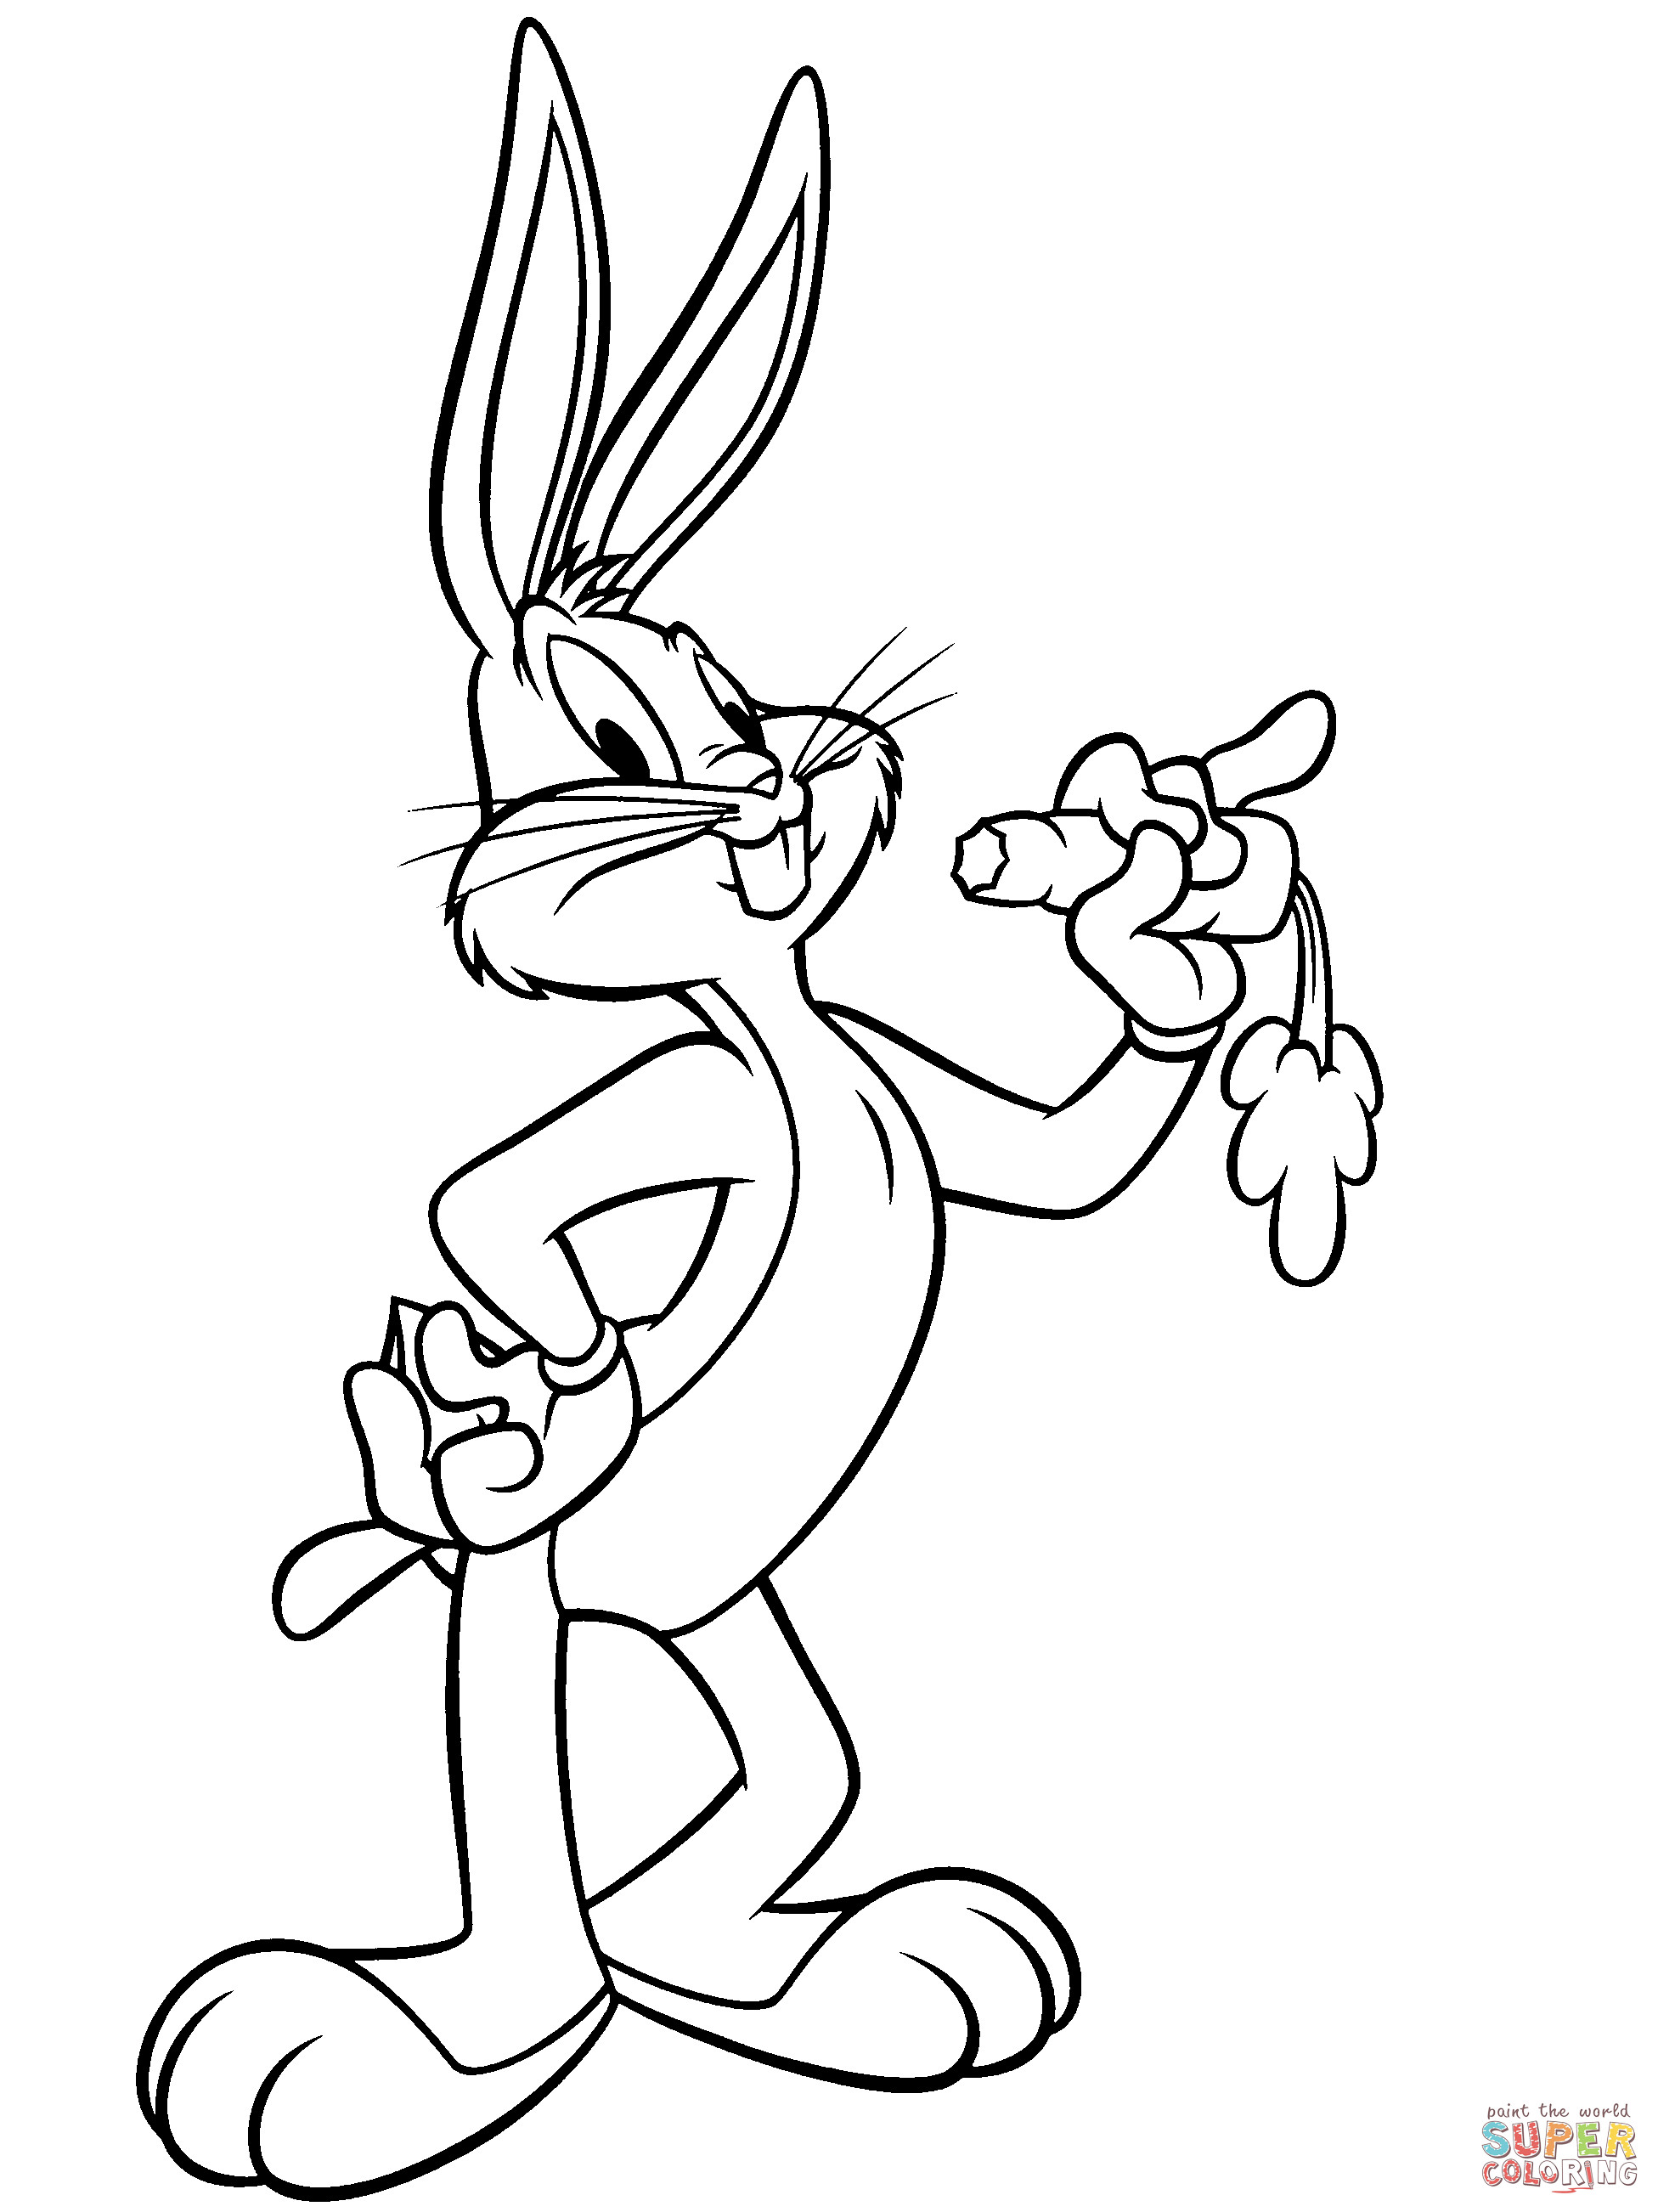 Bugs Bunny Ausmalbilder
 Bugs Bunny coloring page